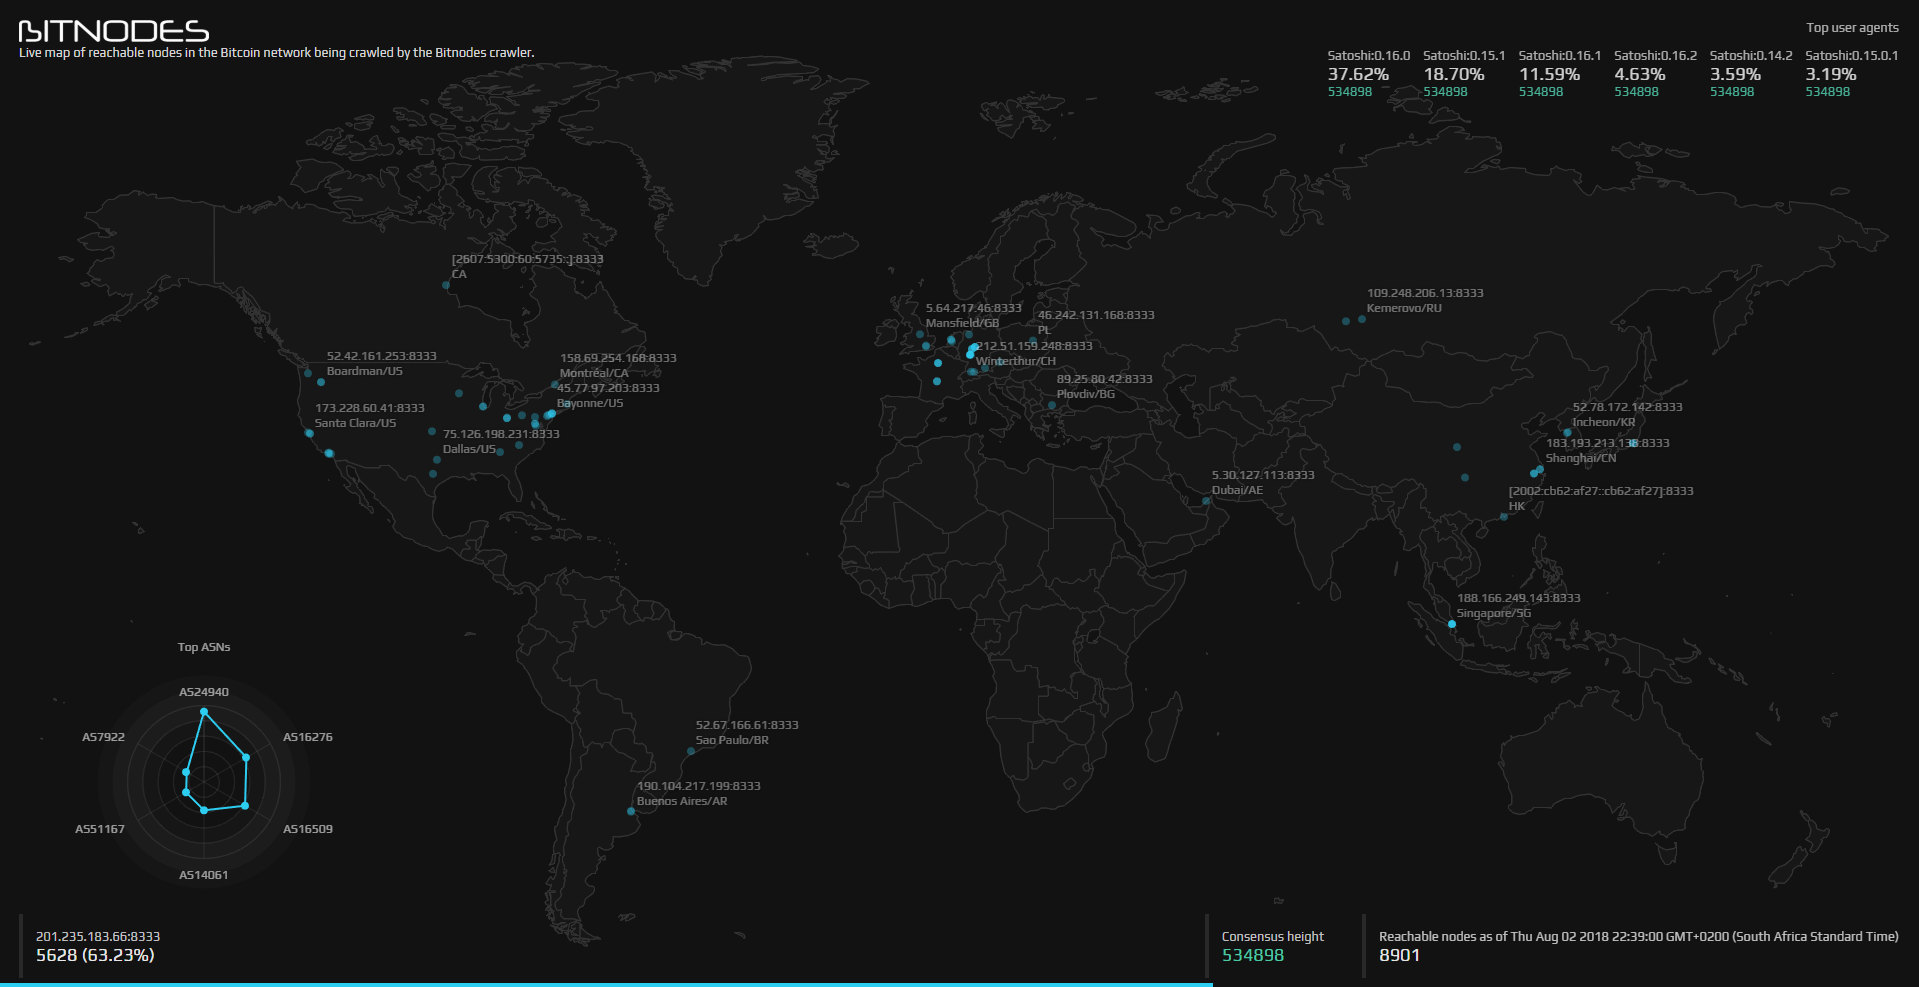 Blockchain but not bitcoin. A live view of global bitcoin nodes